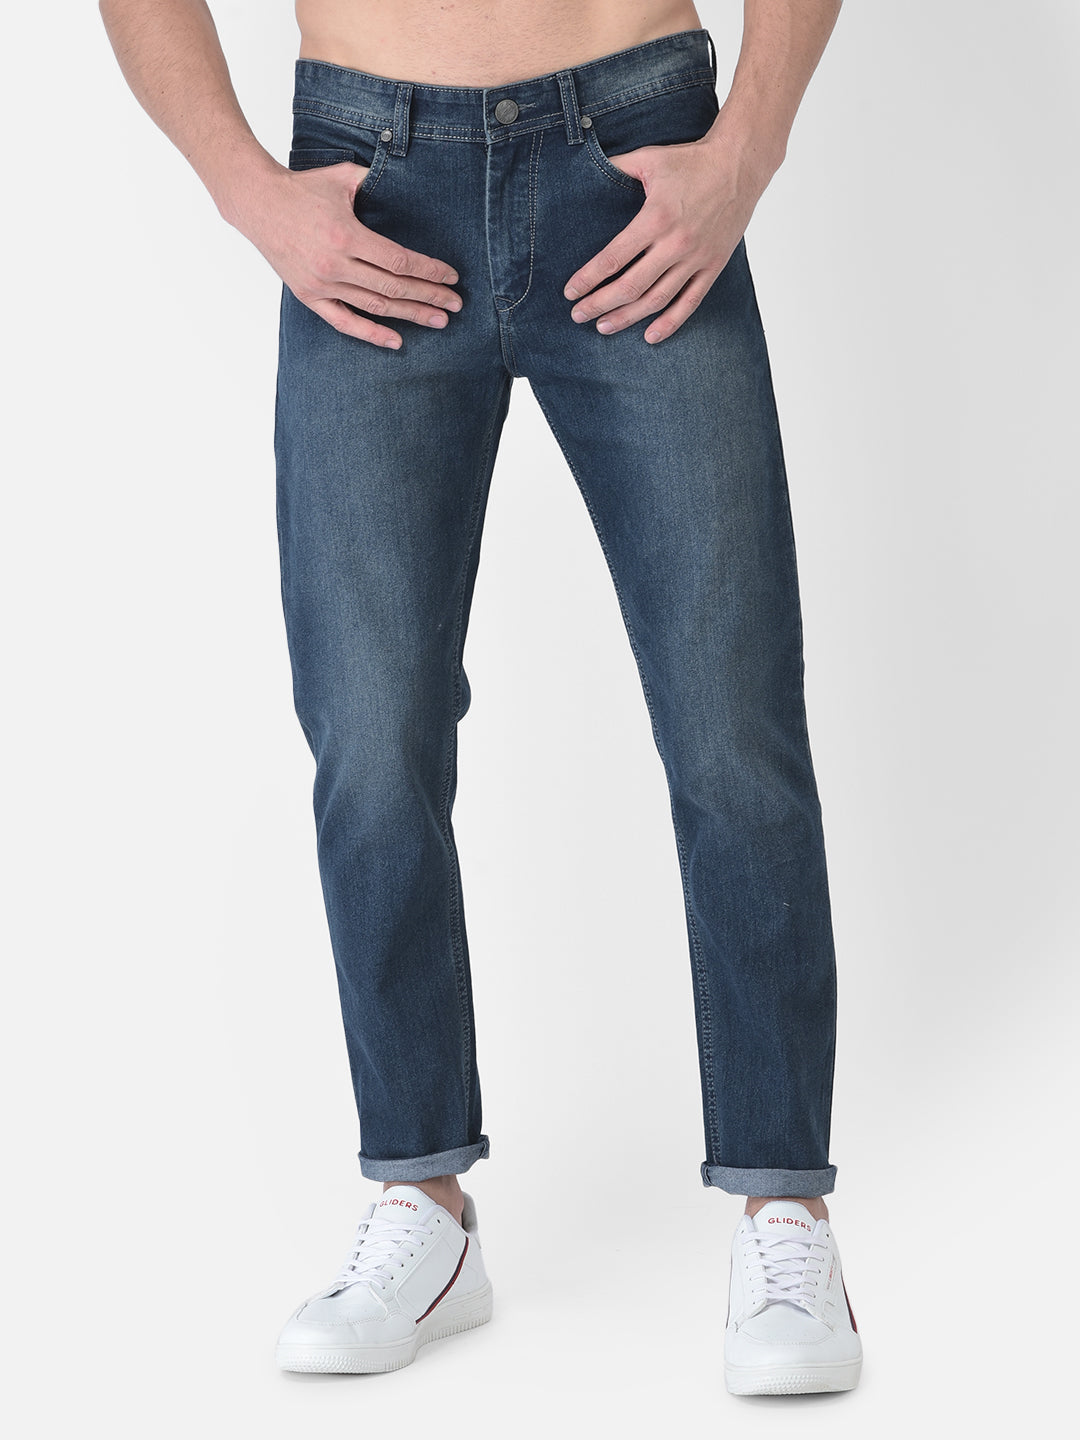 Cobb Tint Blue Narrow Fit Jeans